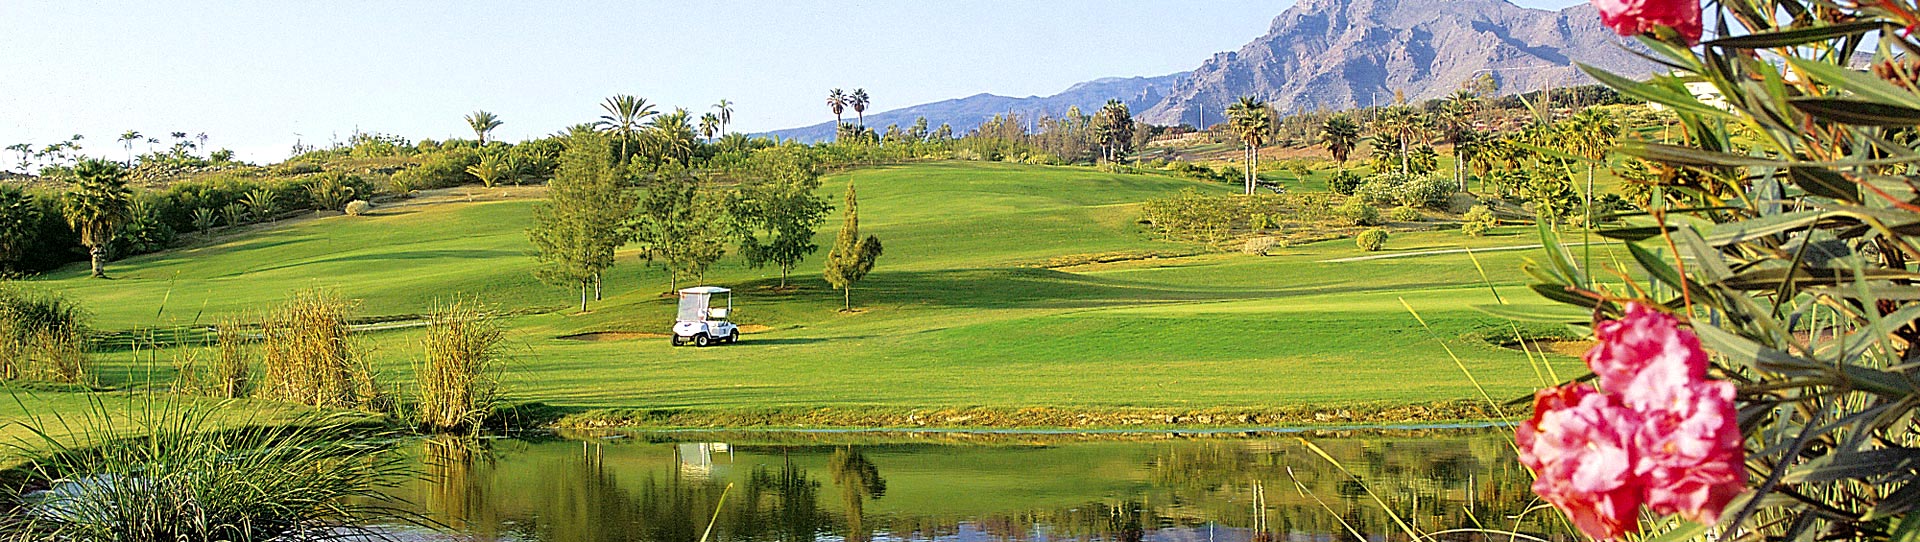 Spain golf courses - Las Américas Golf Course - Photo 2